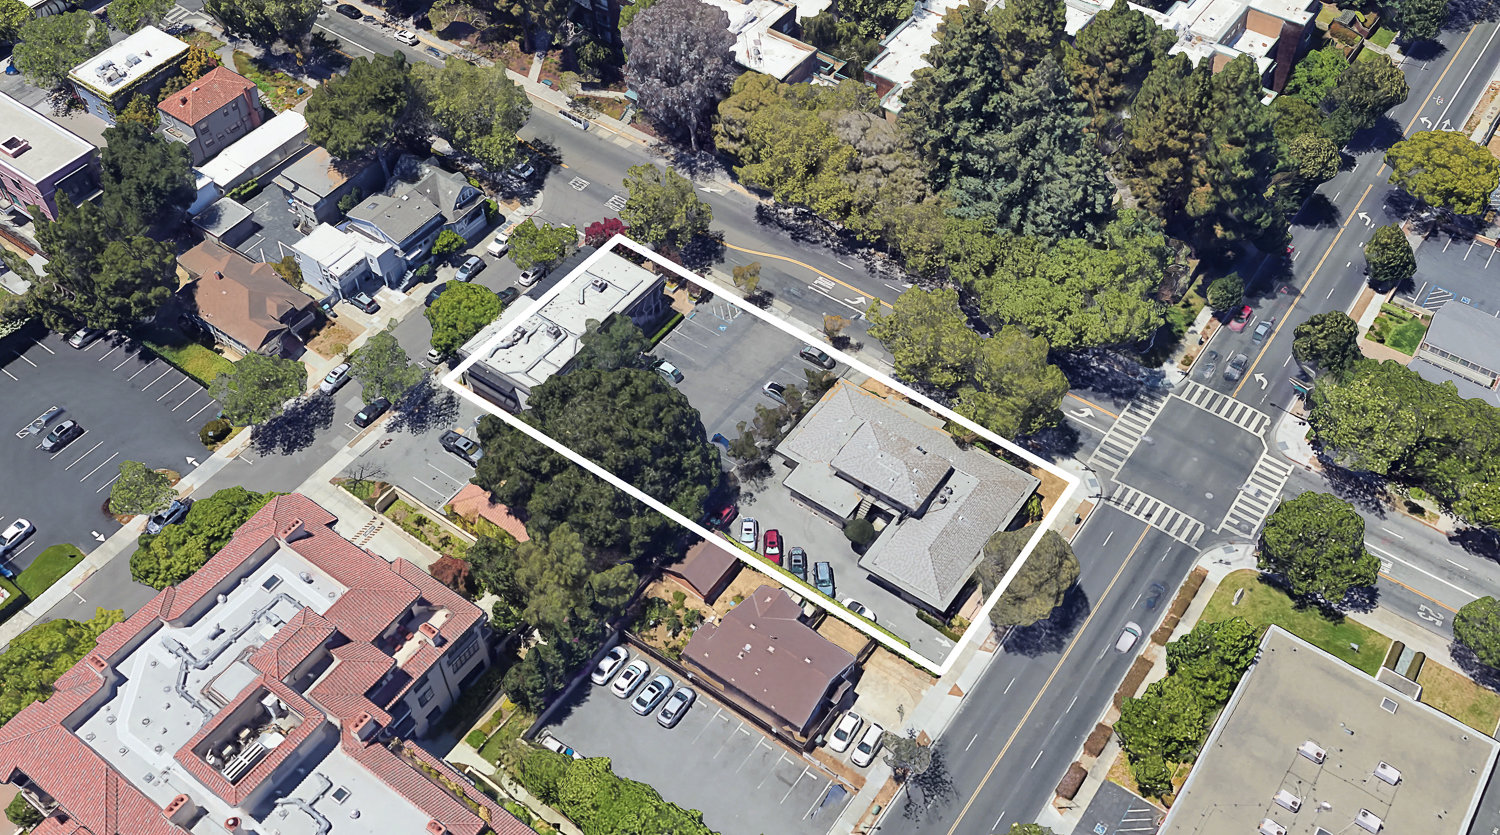 660-680 University Avenue and 511 Byron Street, image by Google Satellite